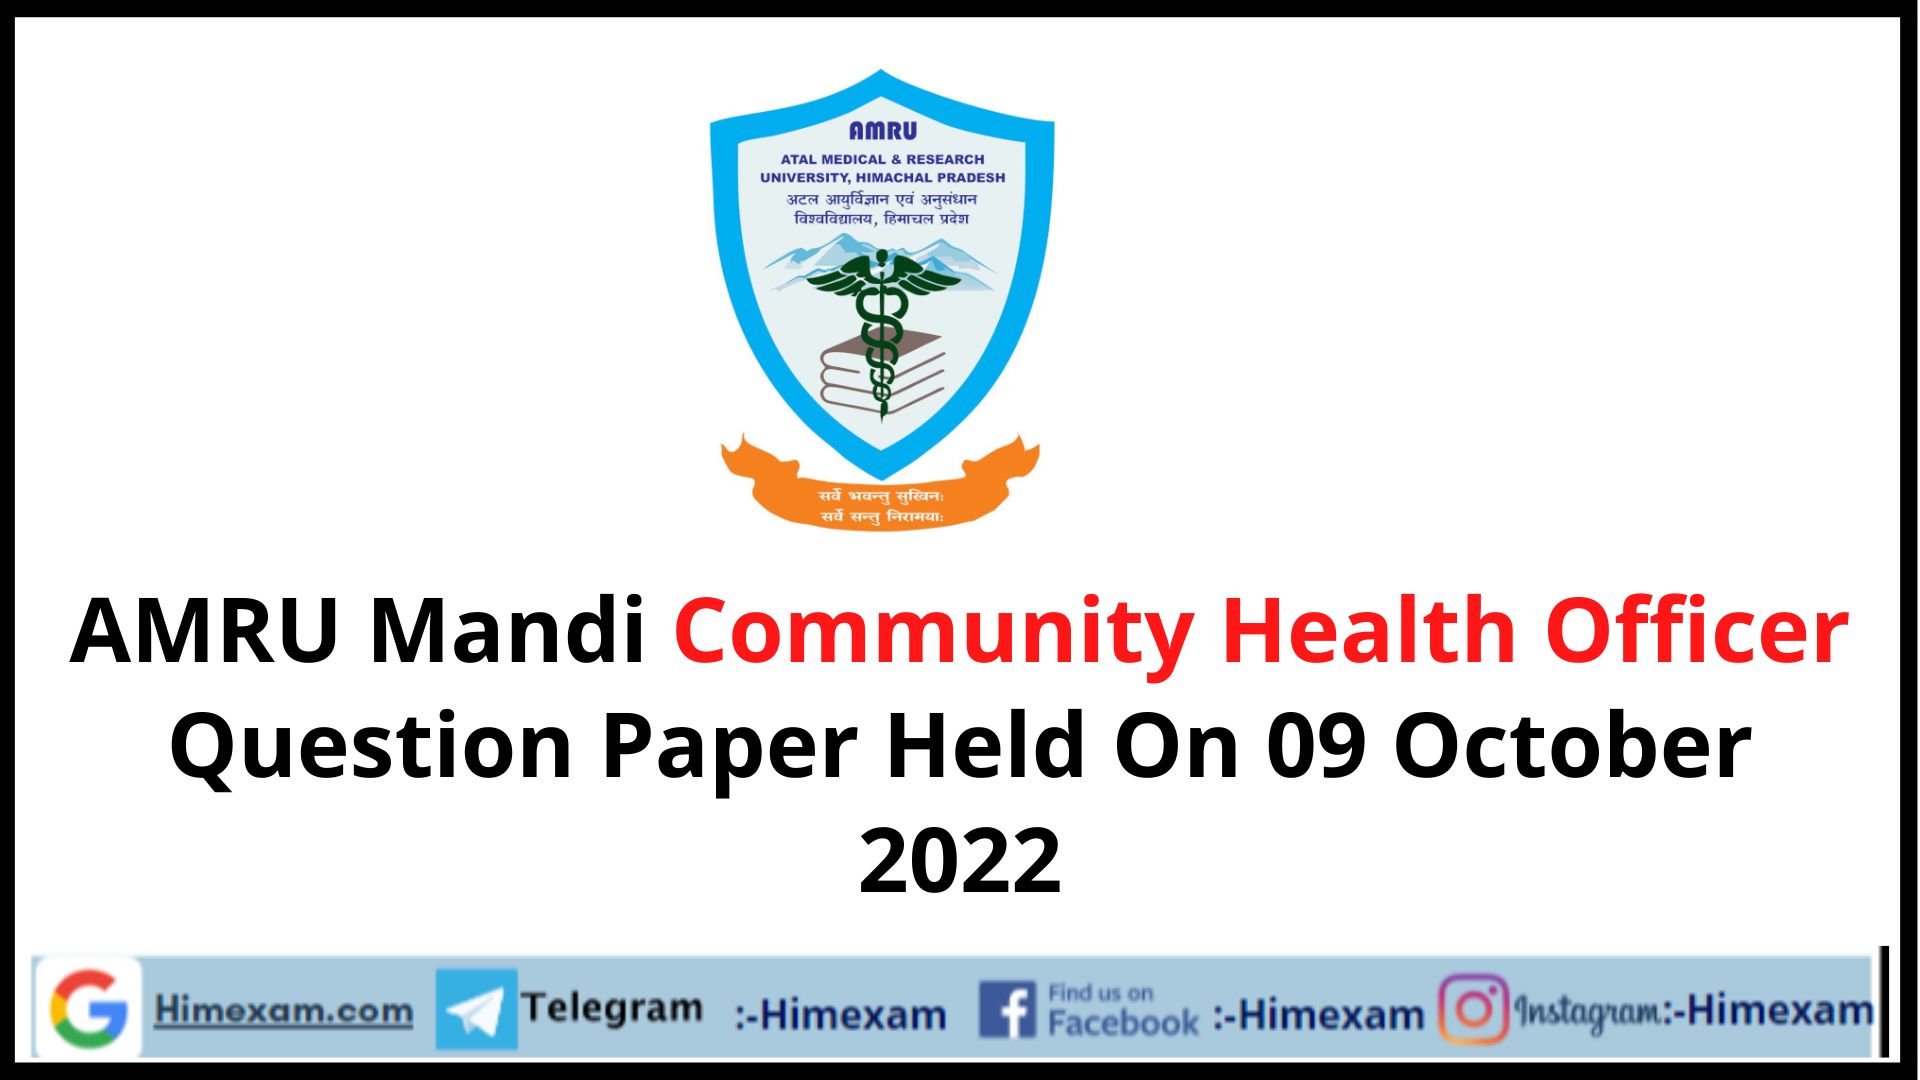 AMRU Mandi Community Health Officer Question Paper Held On 09 October 2022